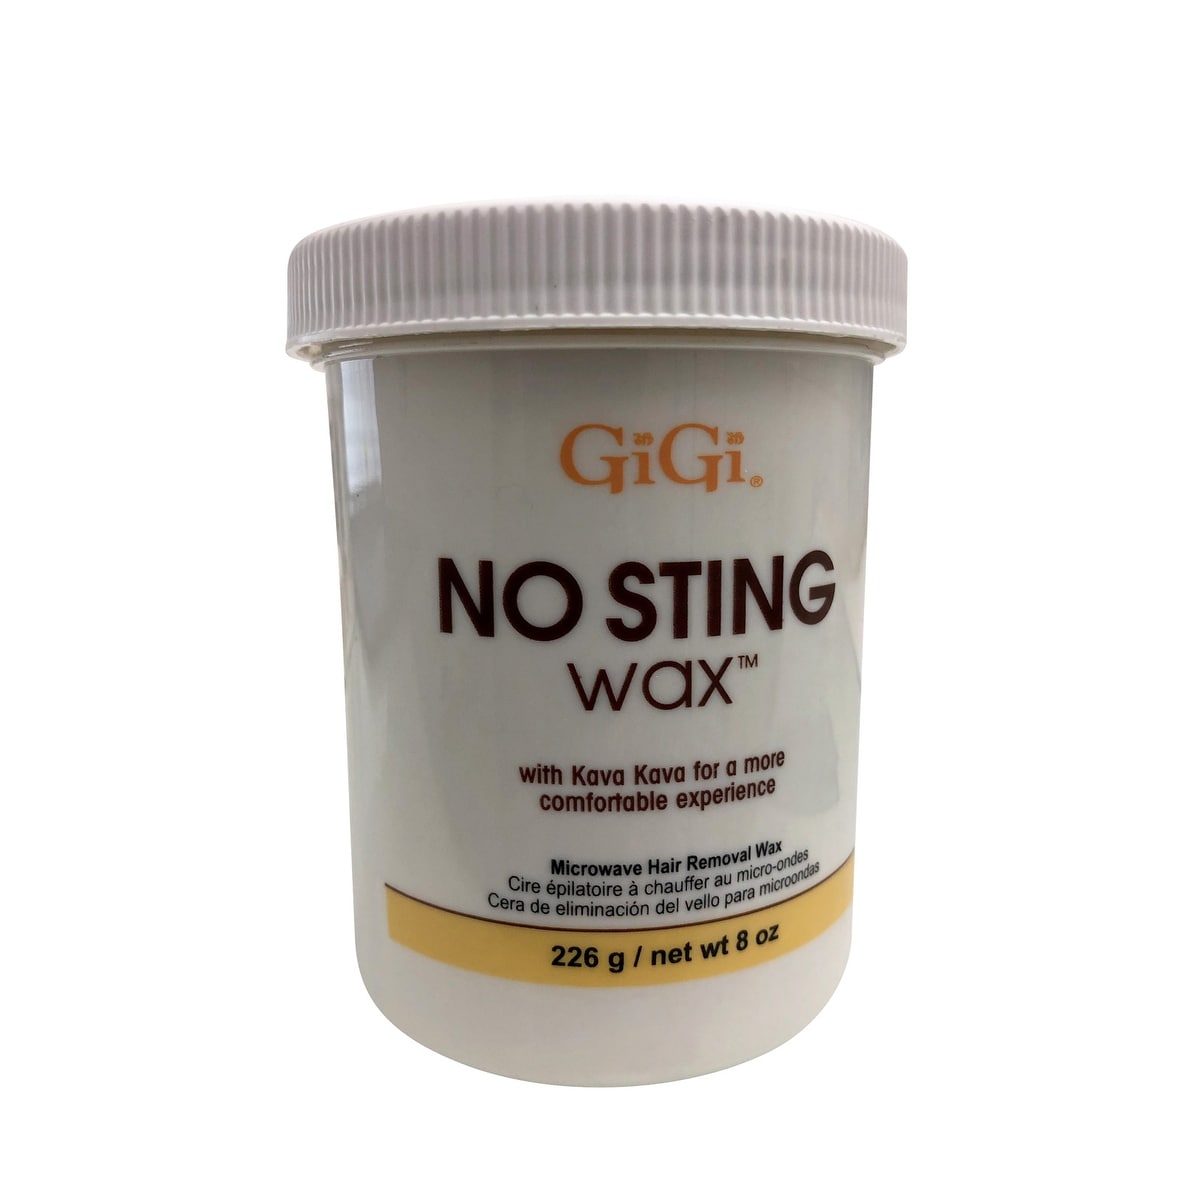 GiGi No Sting Wax with Kava Kava Microwave Hair Removal Wax 8 OZ